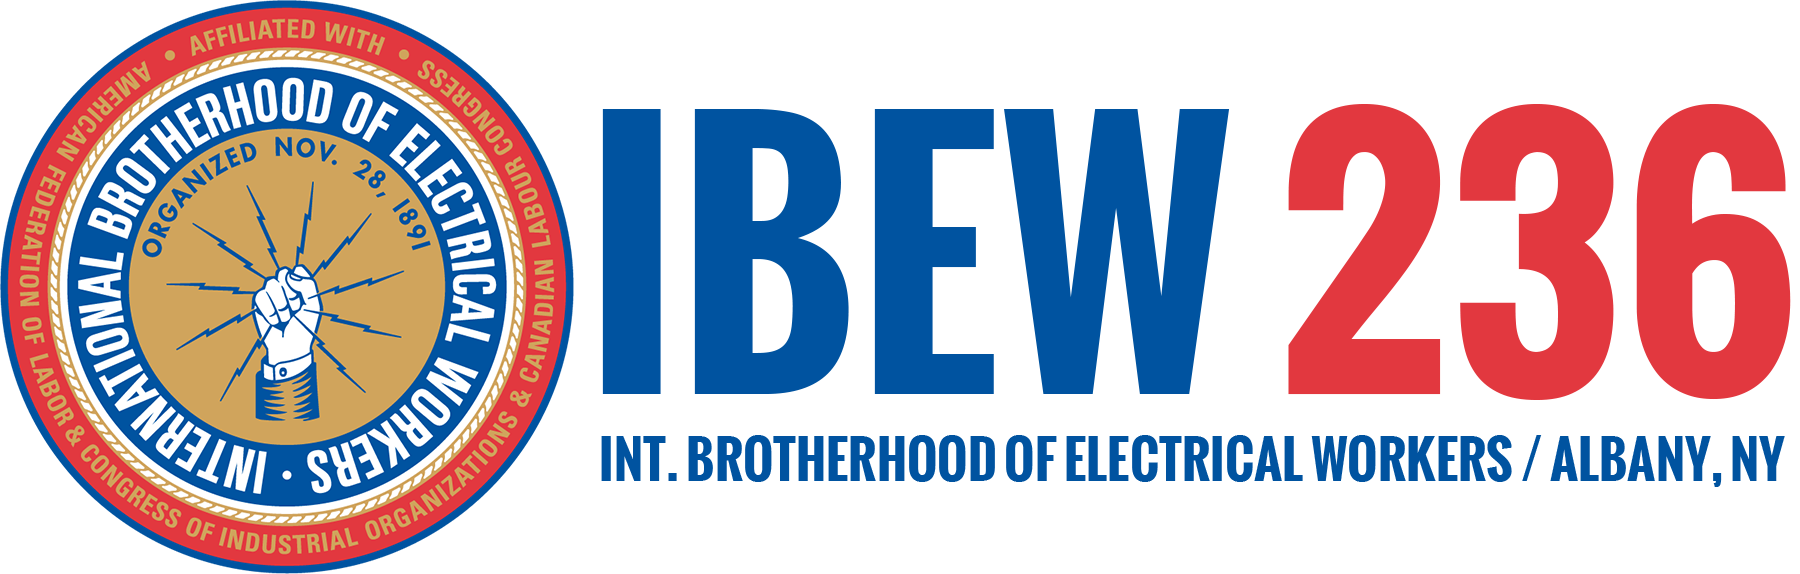 IBEW 236